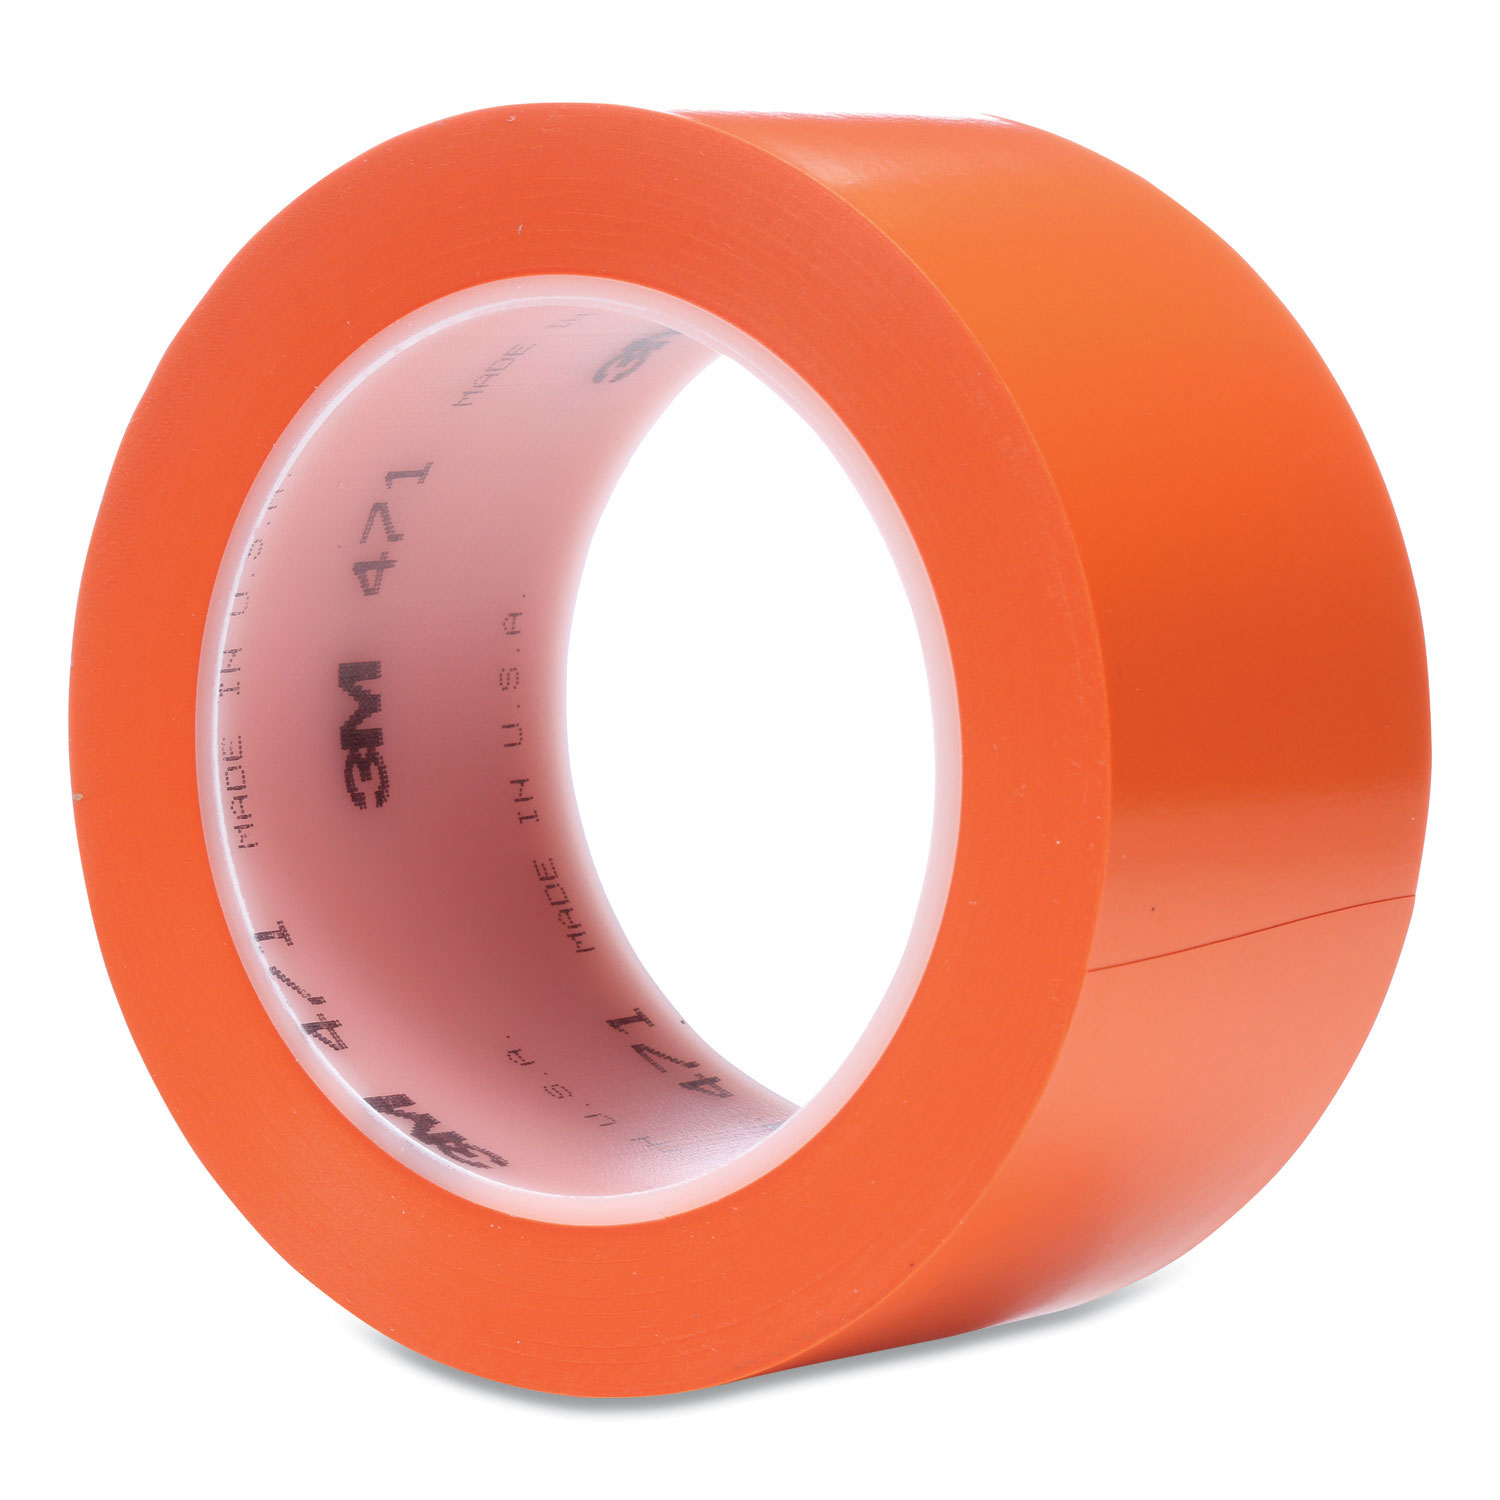 3m-vinyl-floor-marking-tape-471-2-x-36-yds-orange-mmm471org